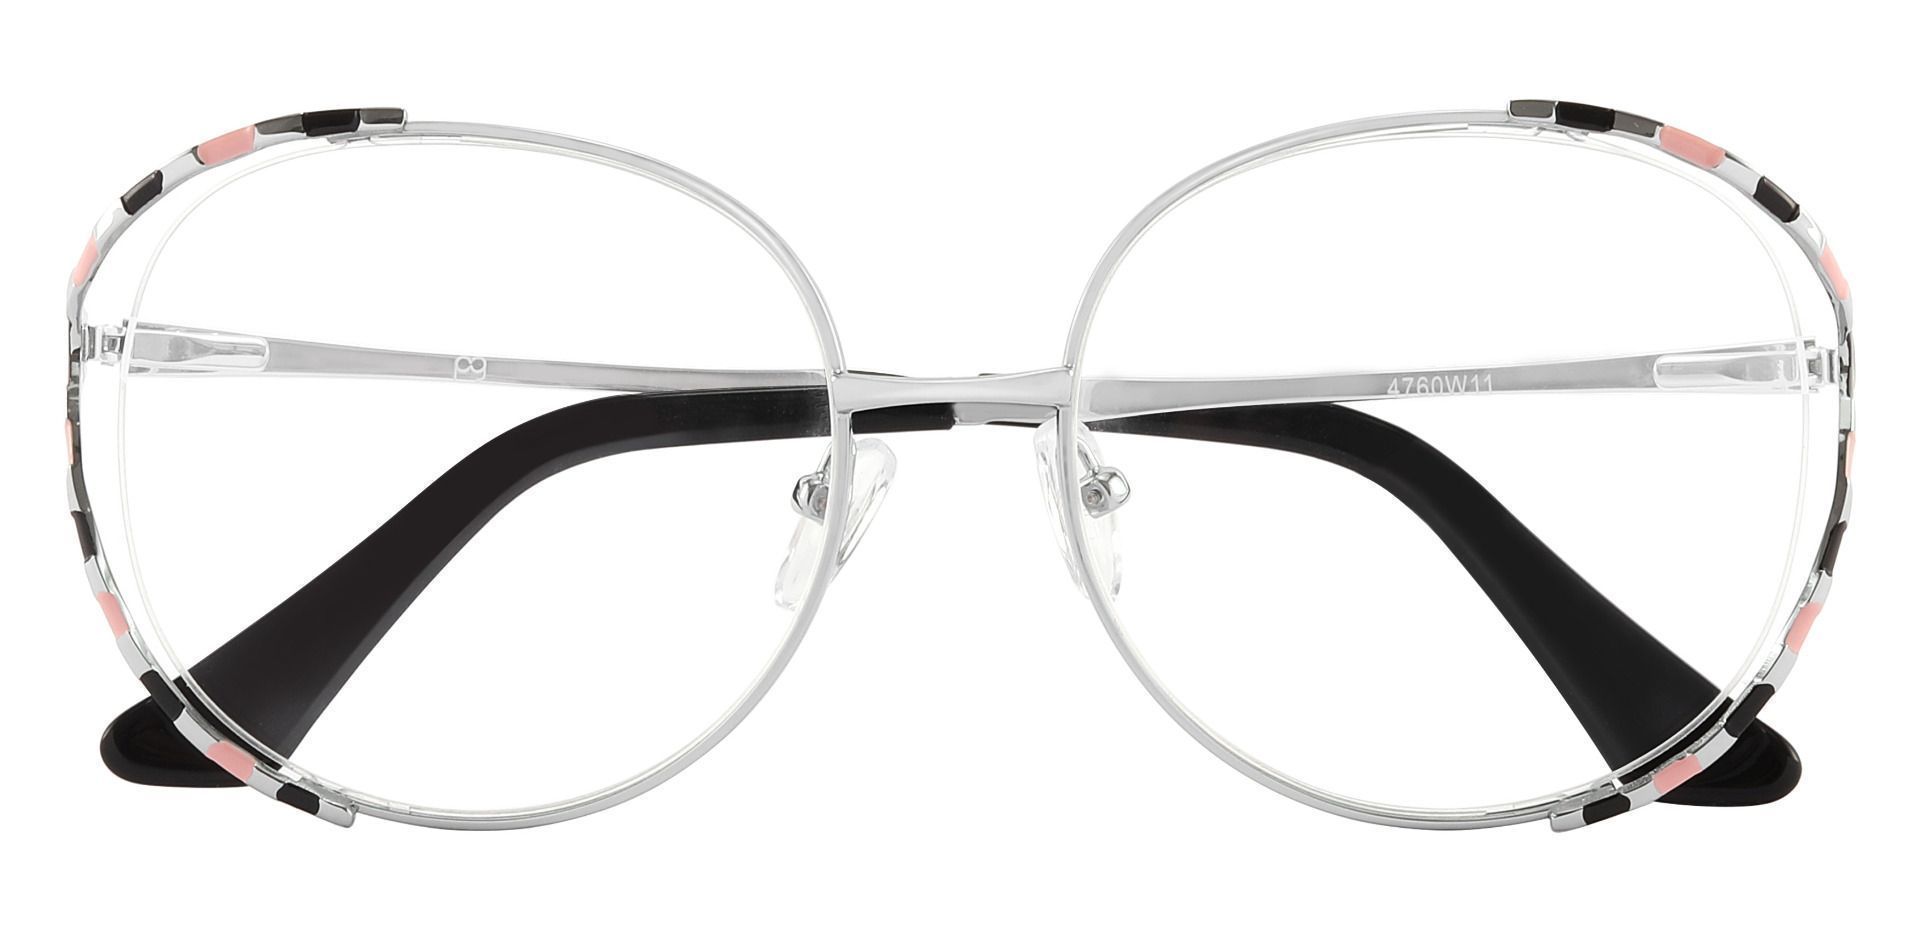 Optical: Oval Eyeglasses, metal — Fashion